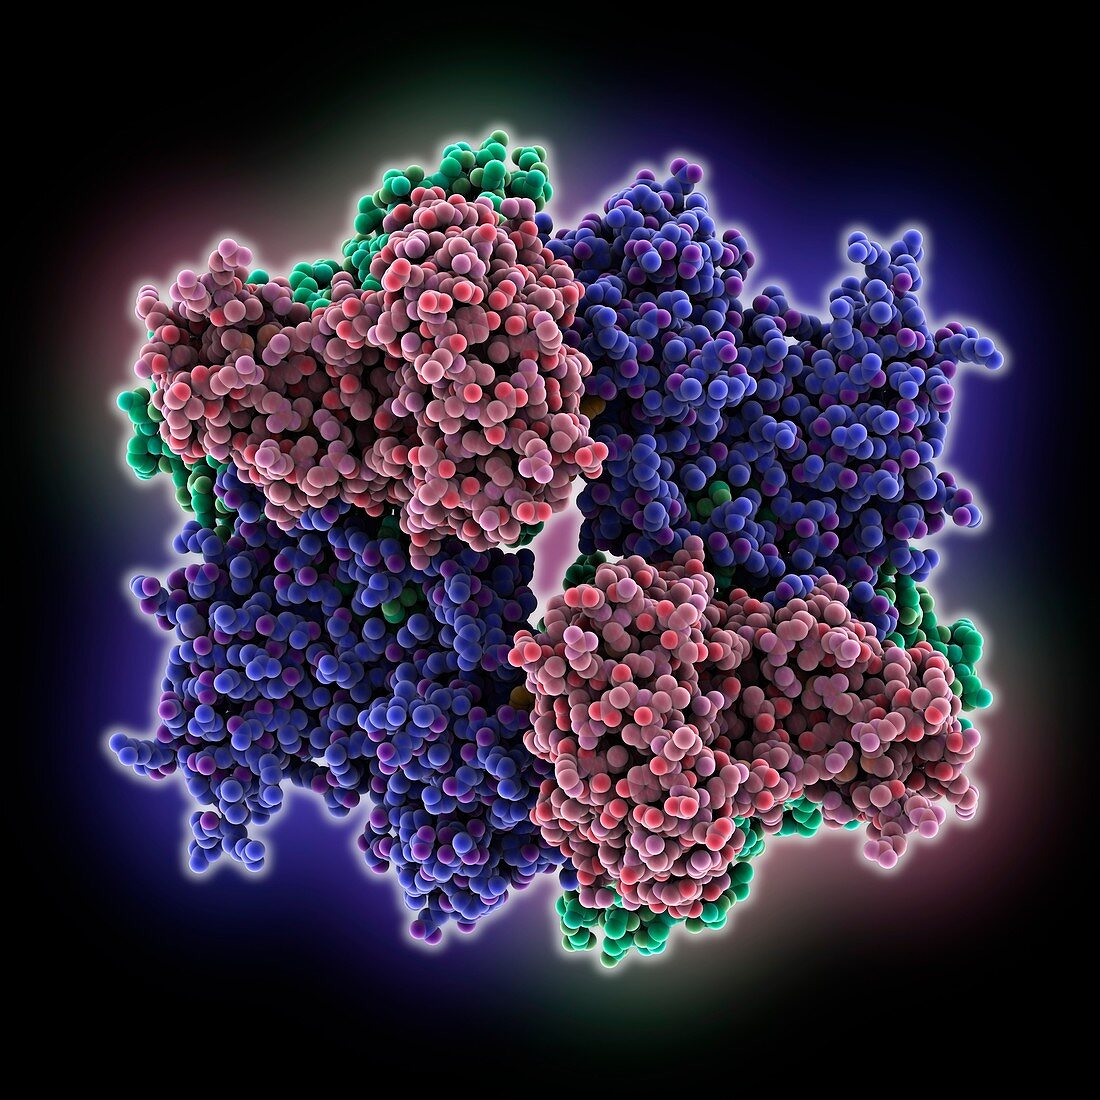 H1N1 influenza A virus nucleoprotein